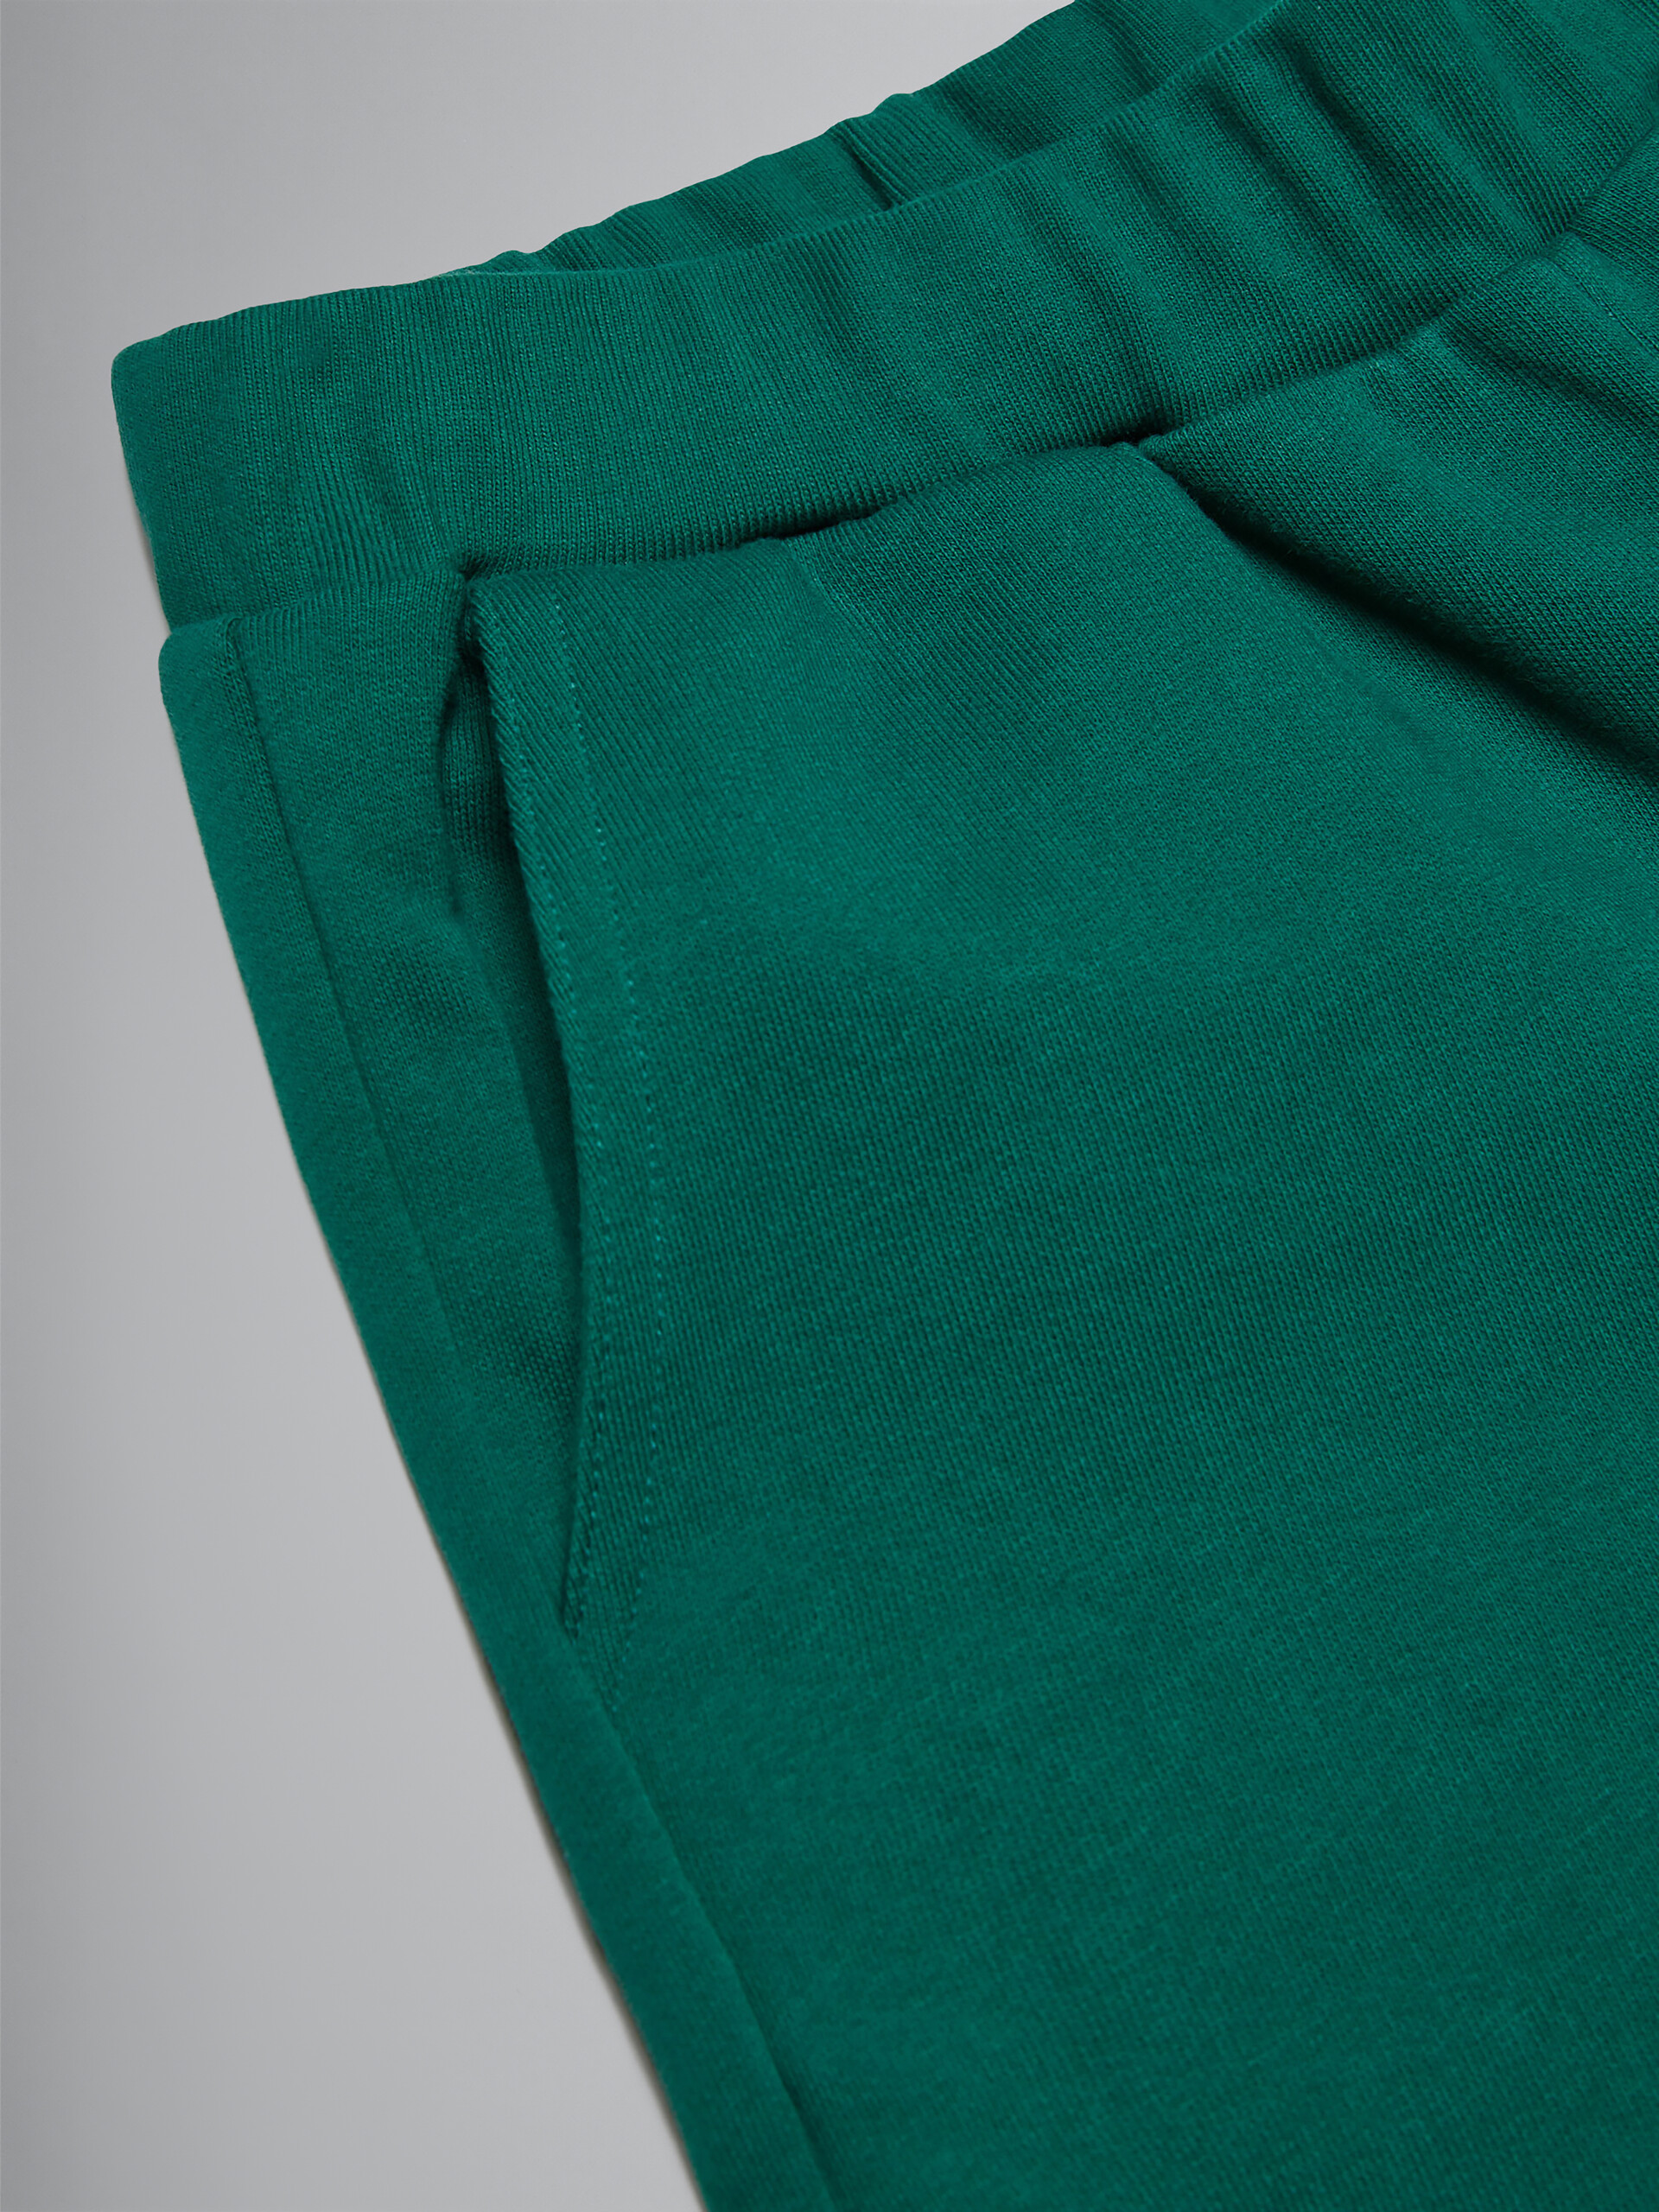 Grüne Fleece-Shorts mit Logo - Hosen - Image 3